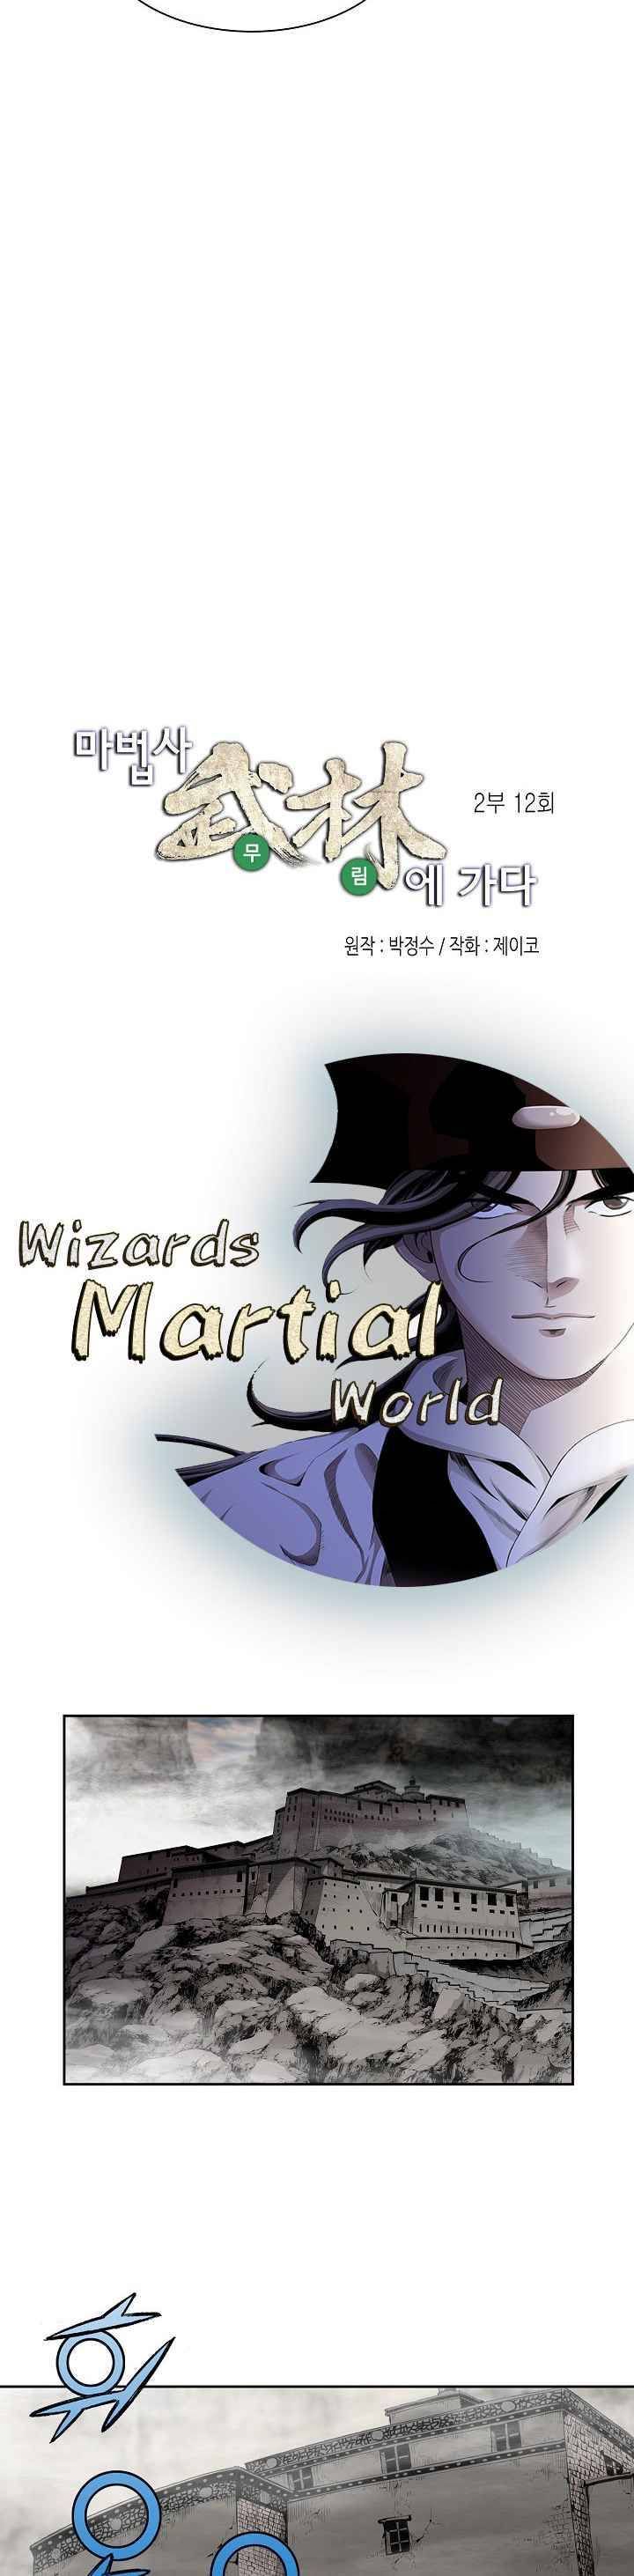 Wizards Martial World 71 3